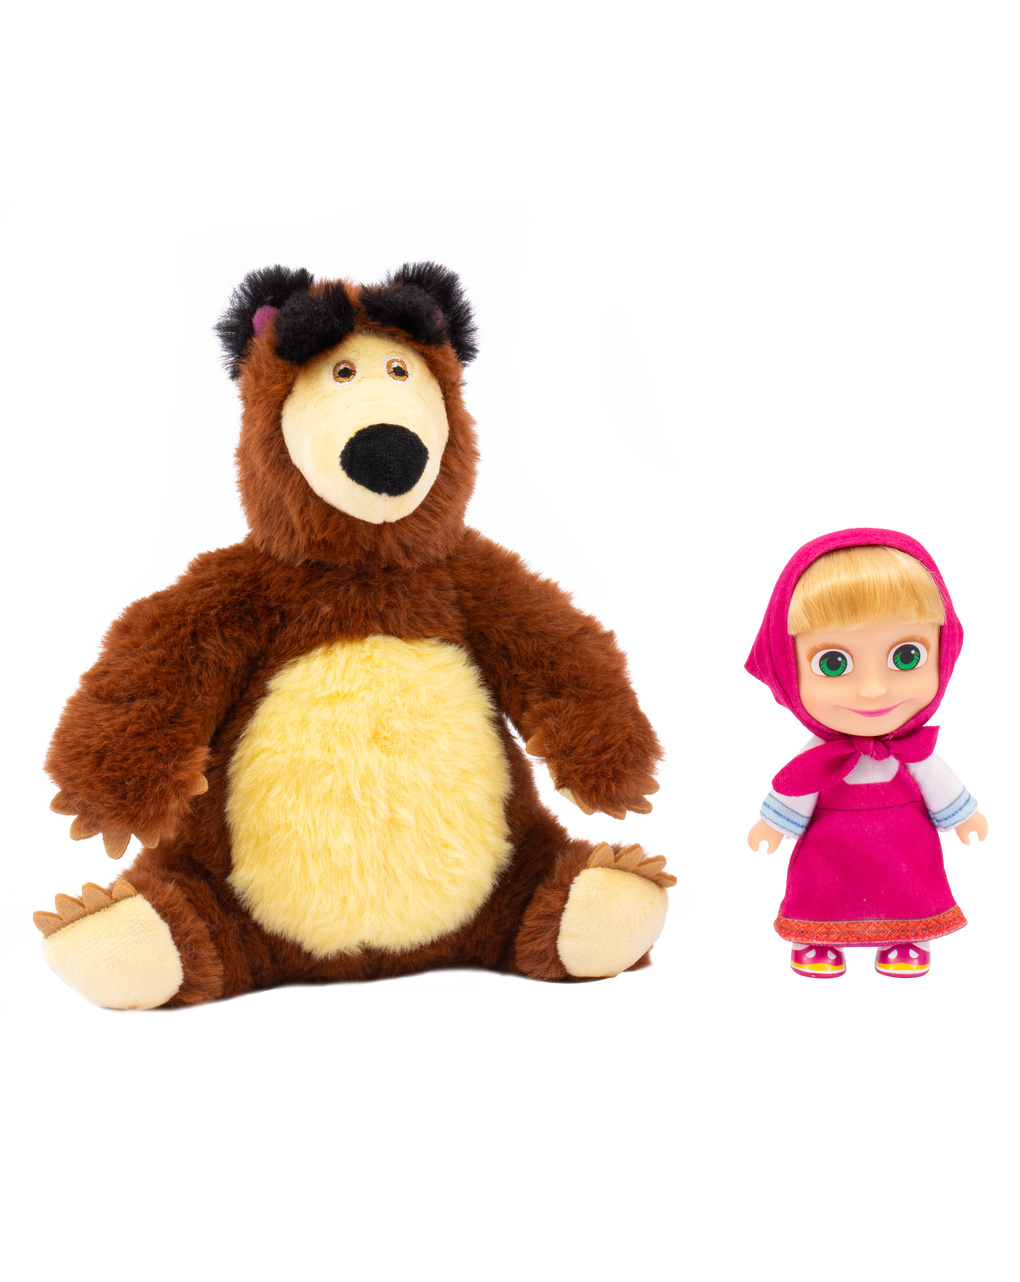 Bambola masha 12cm  e peluche orso 20cm - masha e orso - Masha&Orso